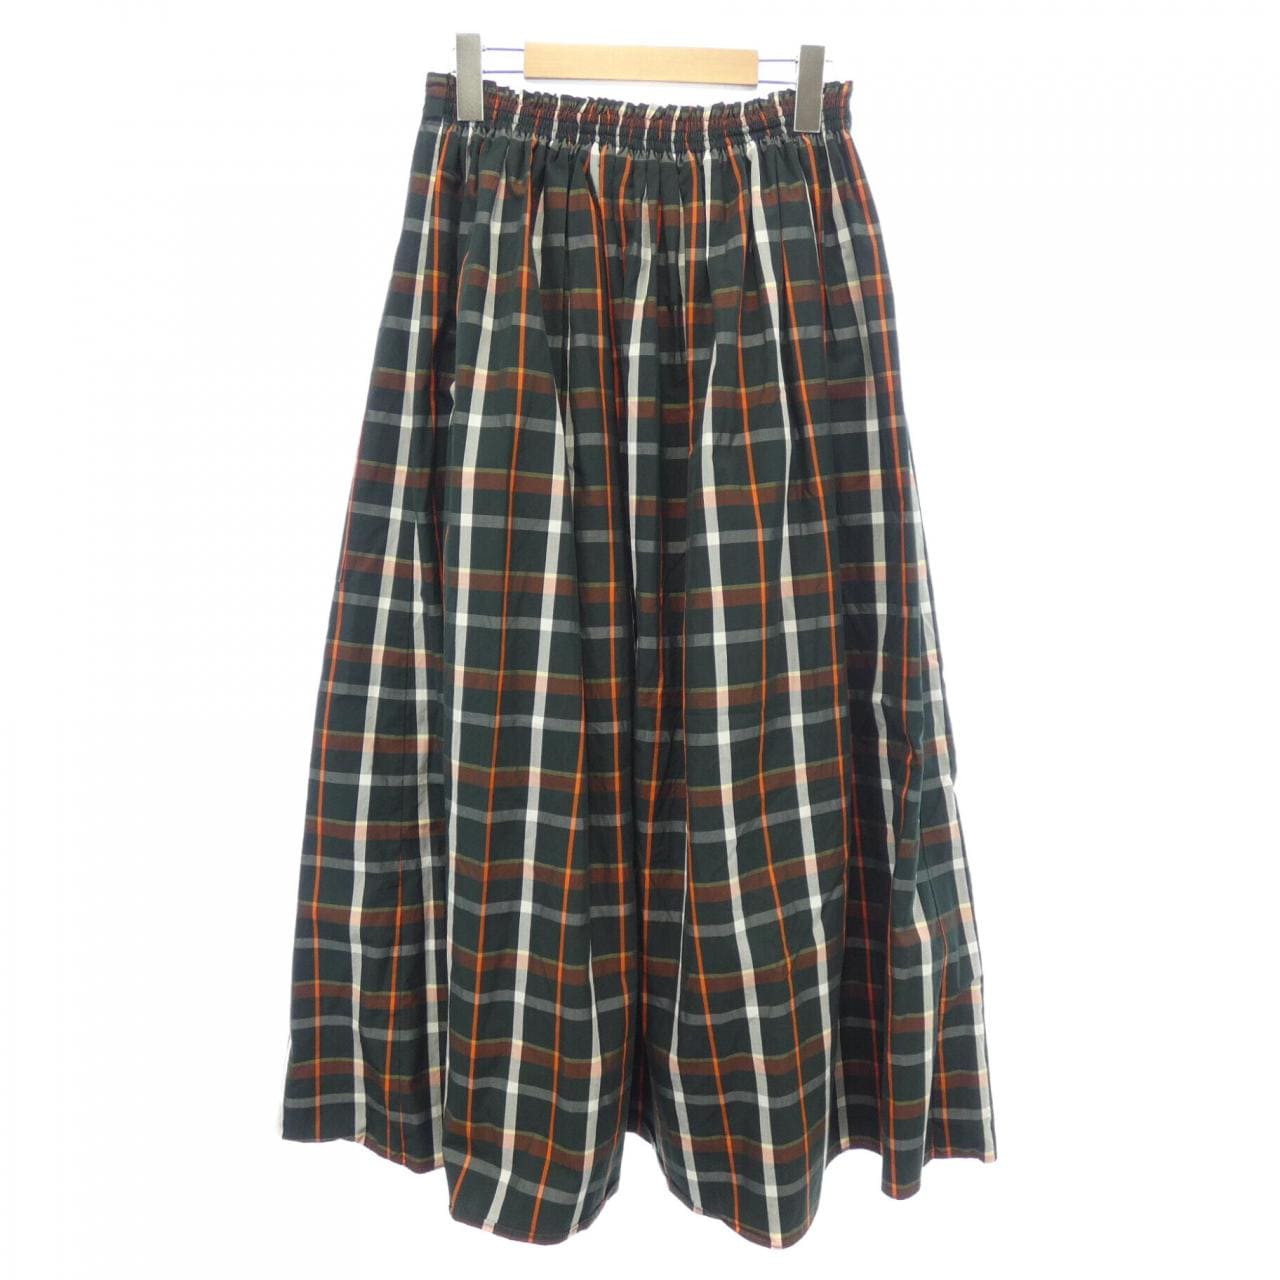 Drawer スカート平置きの裾幅79cm